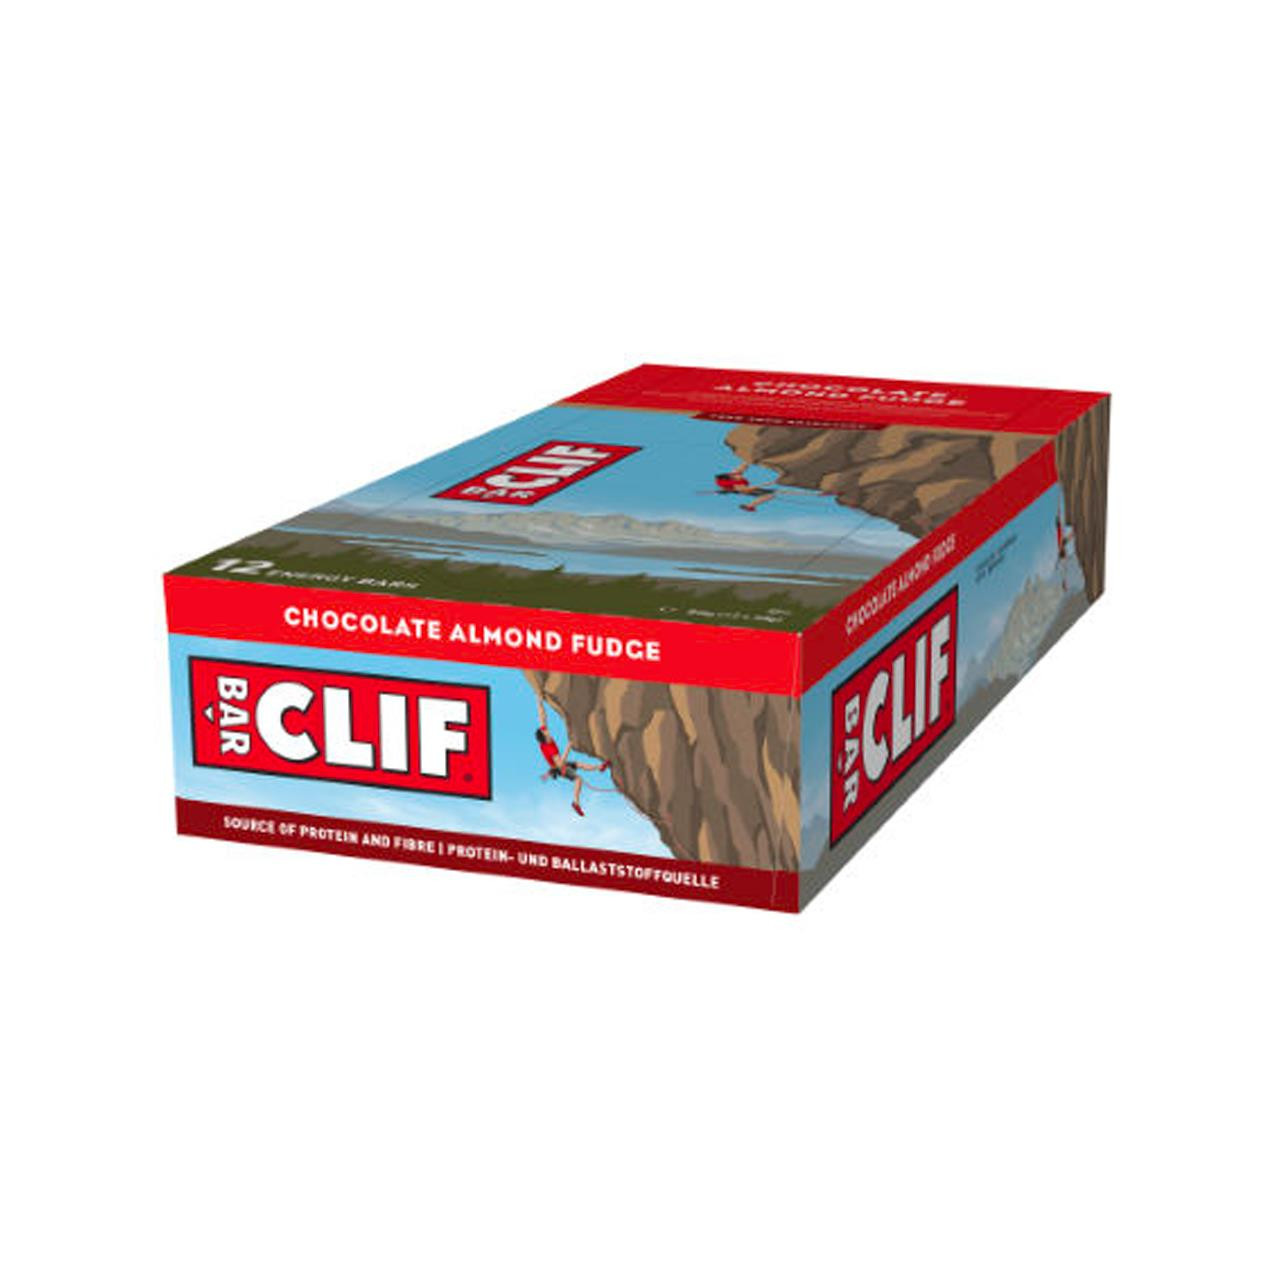 Clif Bar, 12 Pack (Chocolate Almond Fudge)